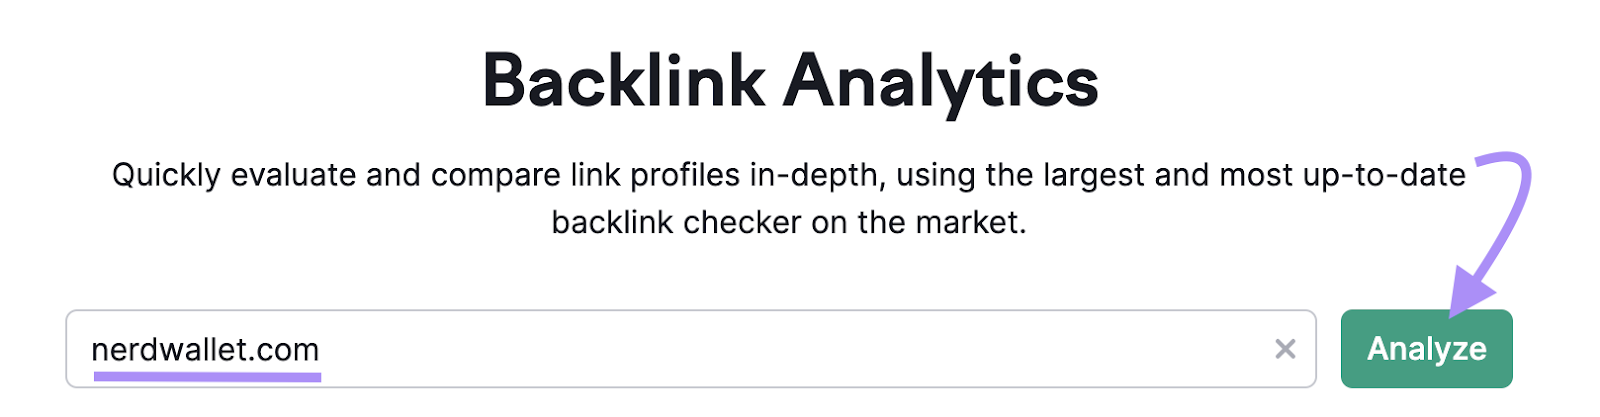 search for "nerdwallet.com" in Backlink Analytics